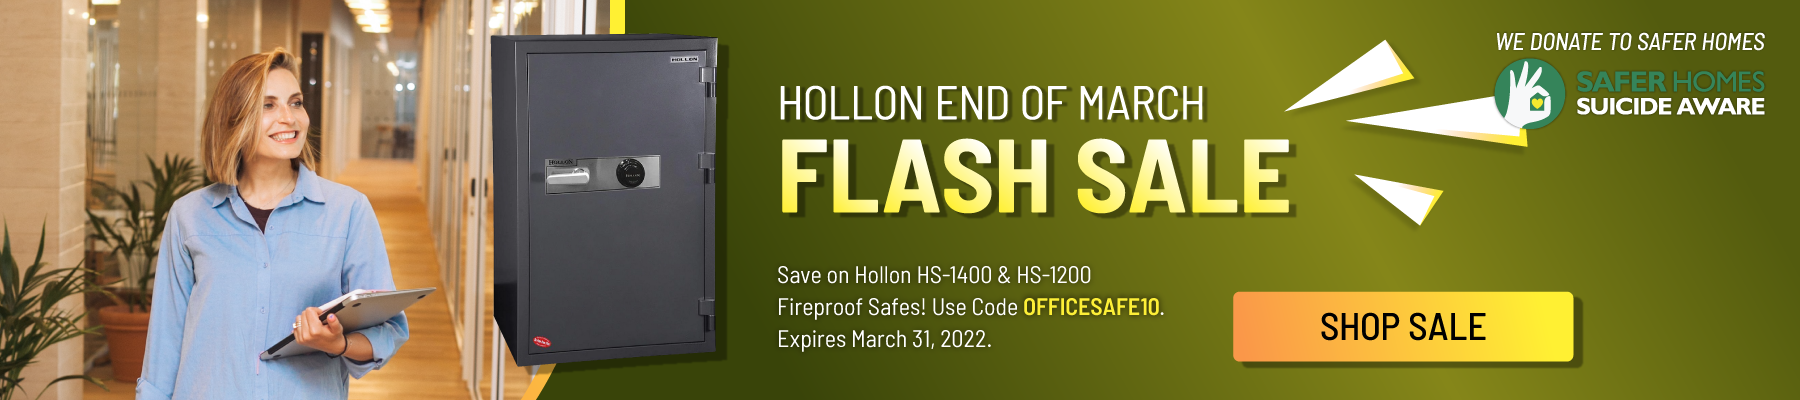 Hollon Flash Sale on HS-1200 & HS-1400 Fireproof Office Safes